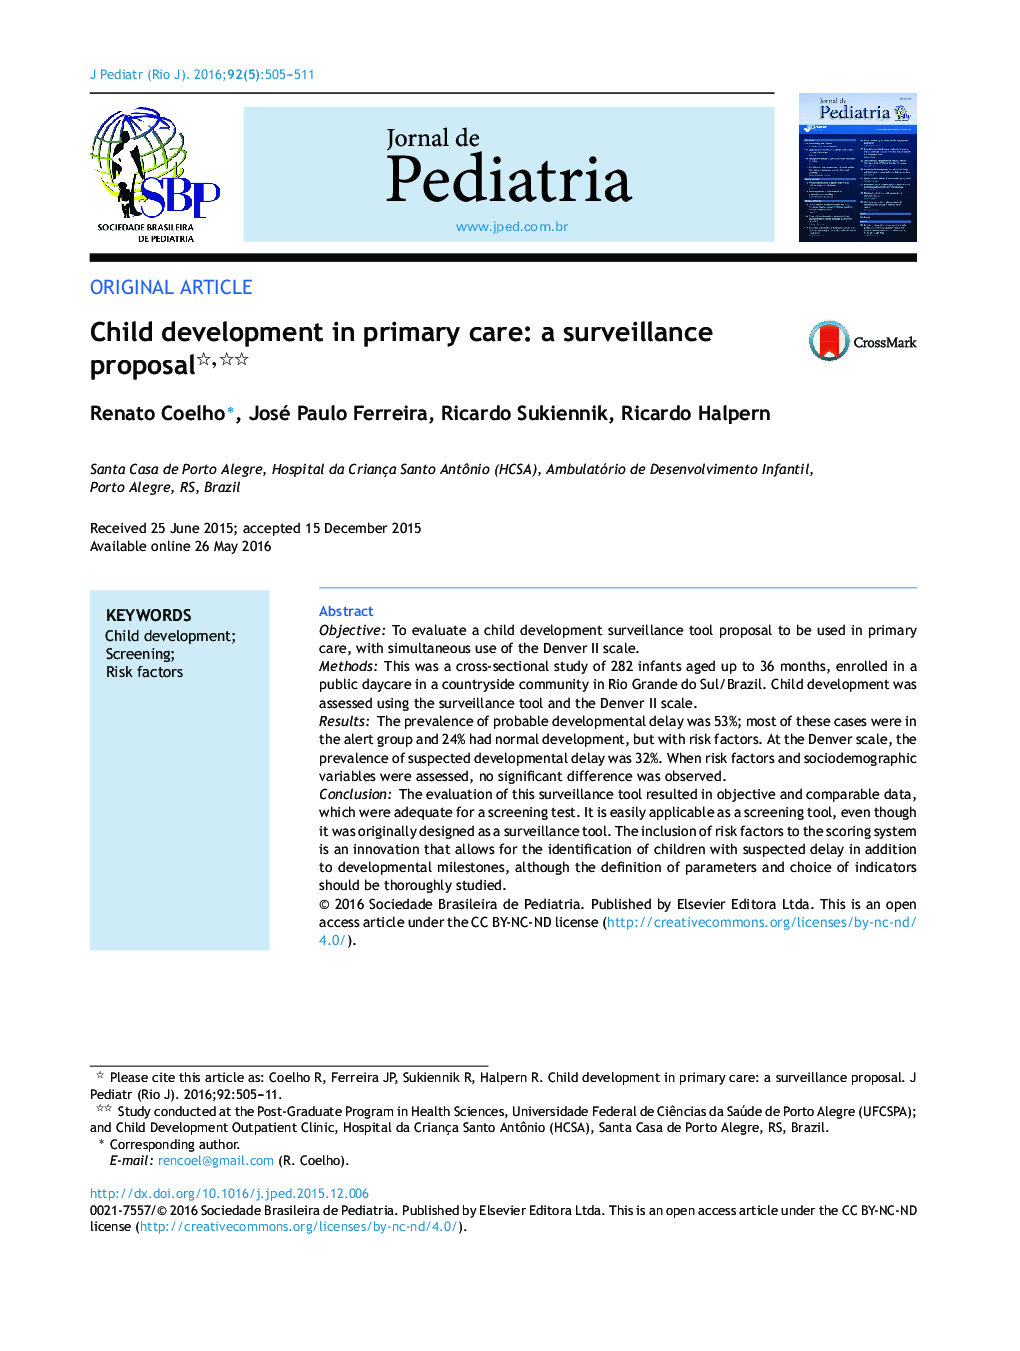 Child development in primary care: a surveillance proposal 